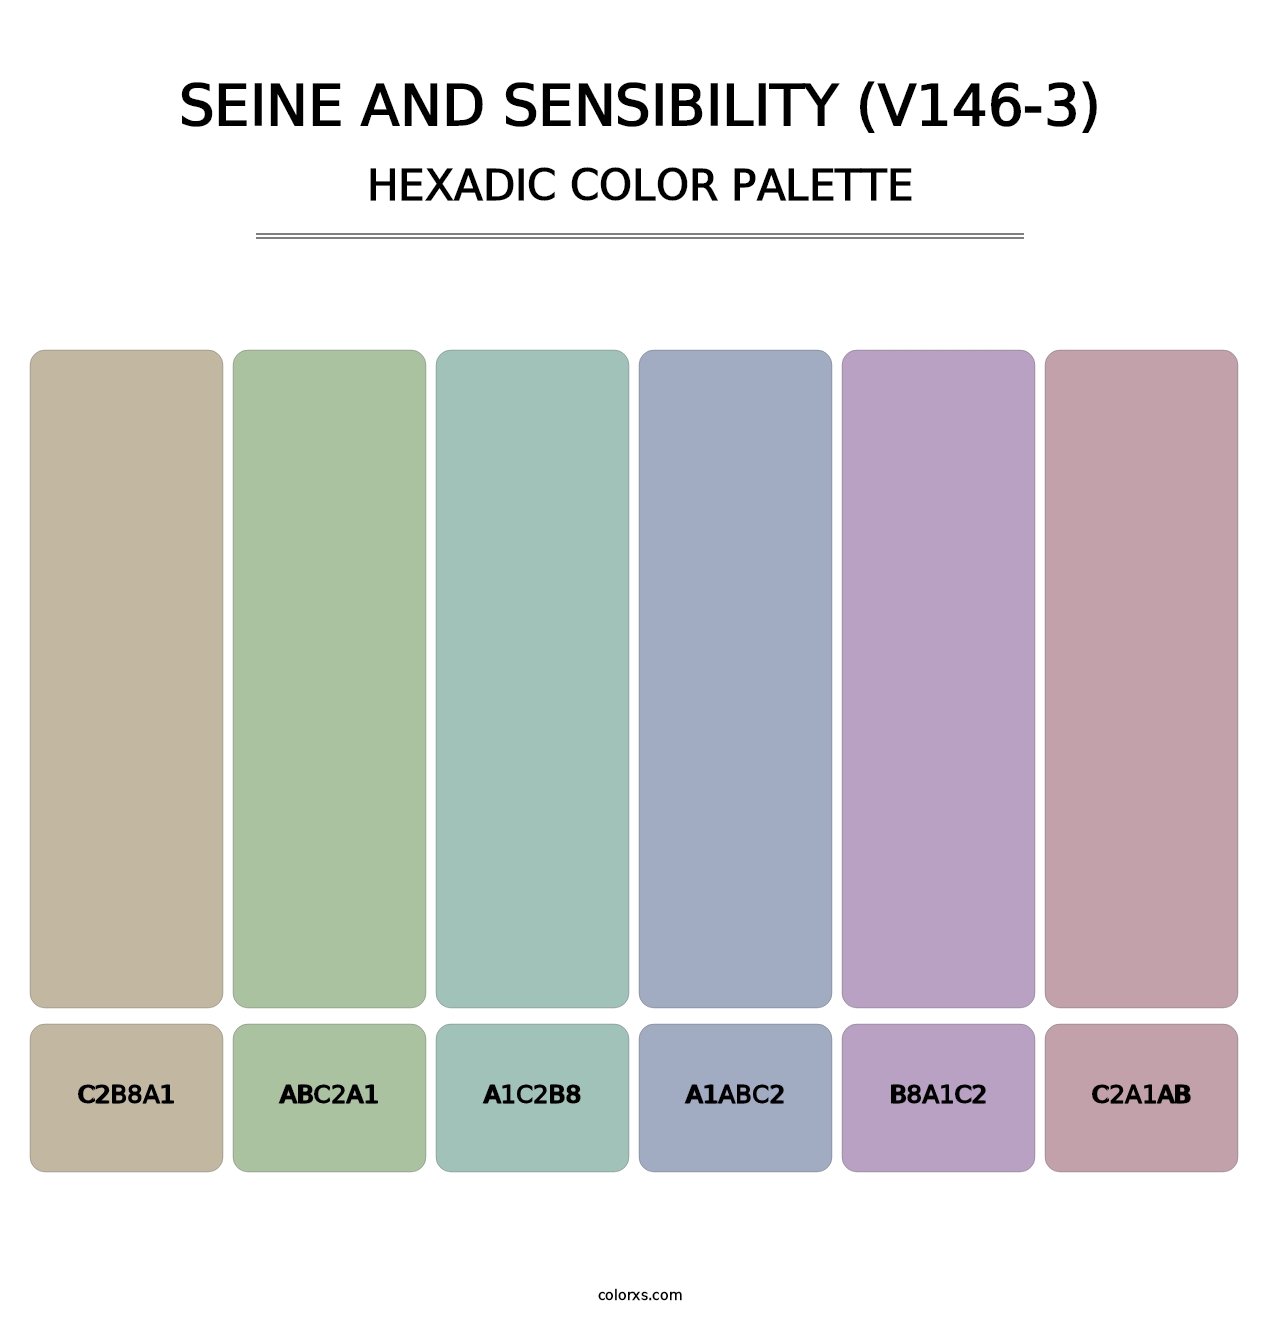 Seine and Sensibility (V146-3) - Hexadic Color Palette